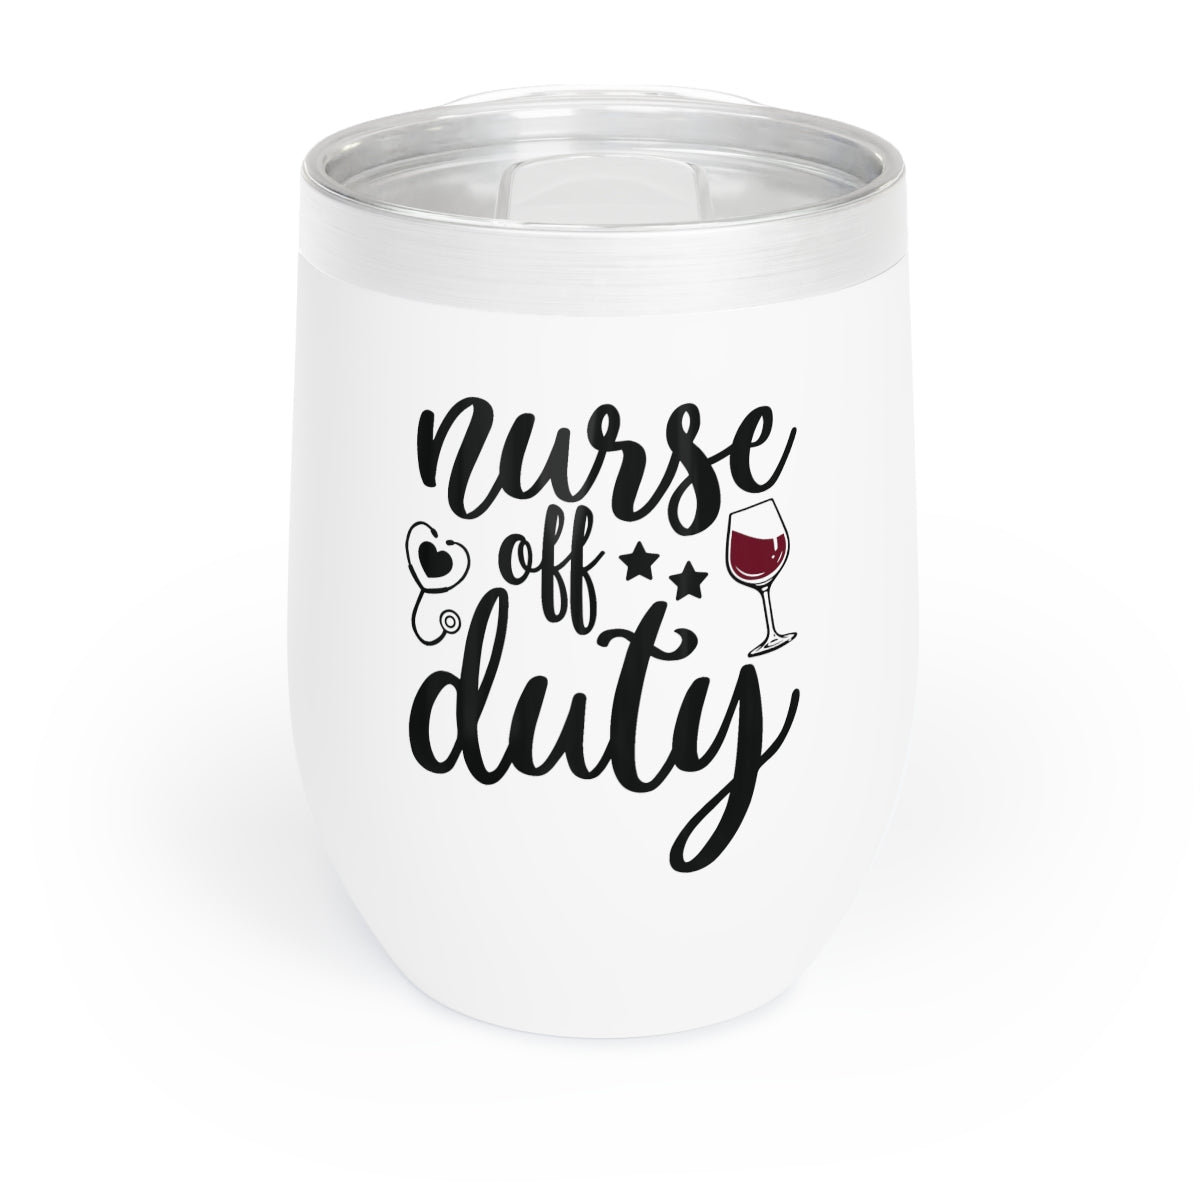 Nurse Off Duty Insulated Wine Tumbler